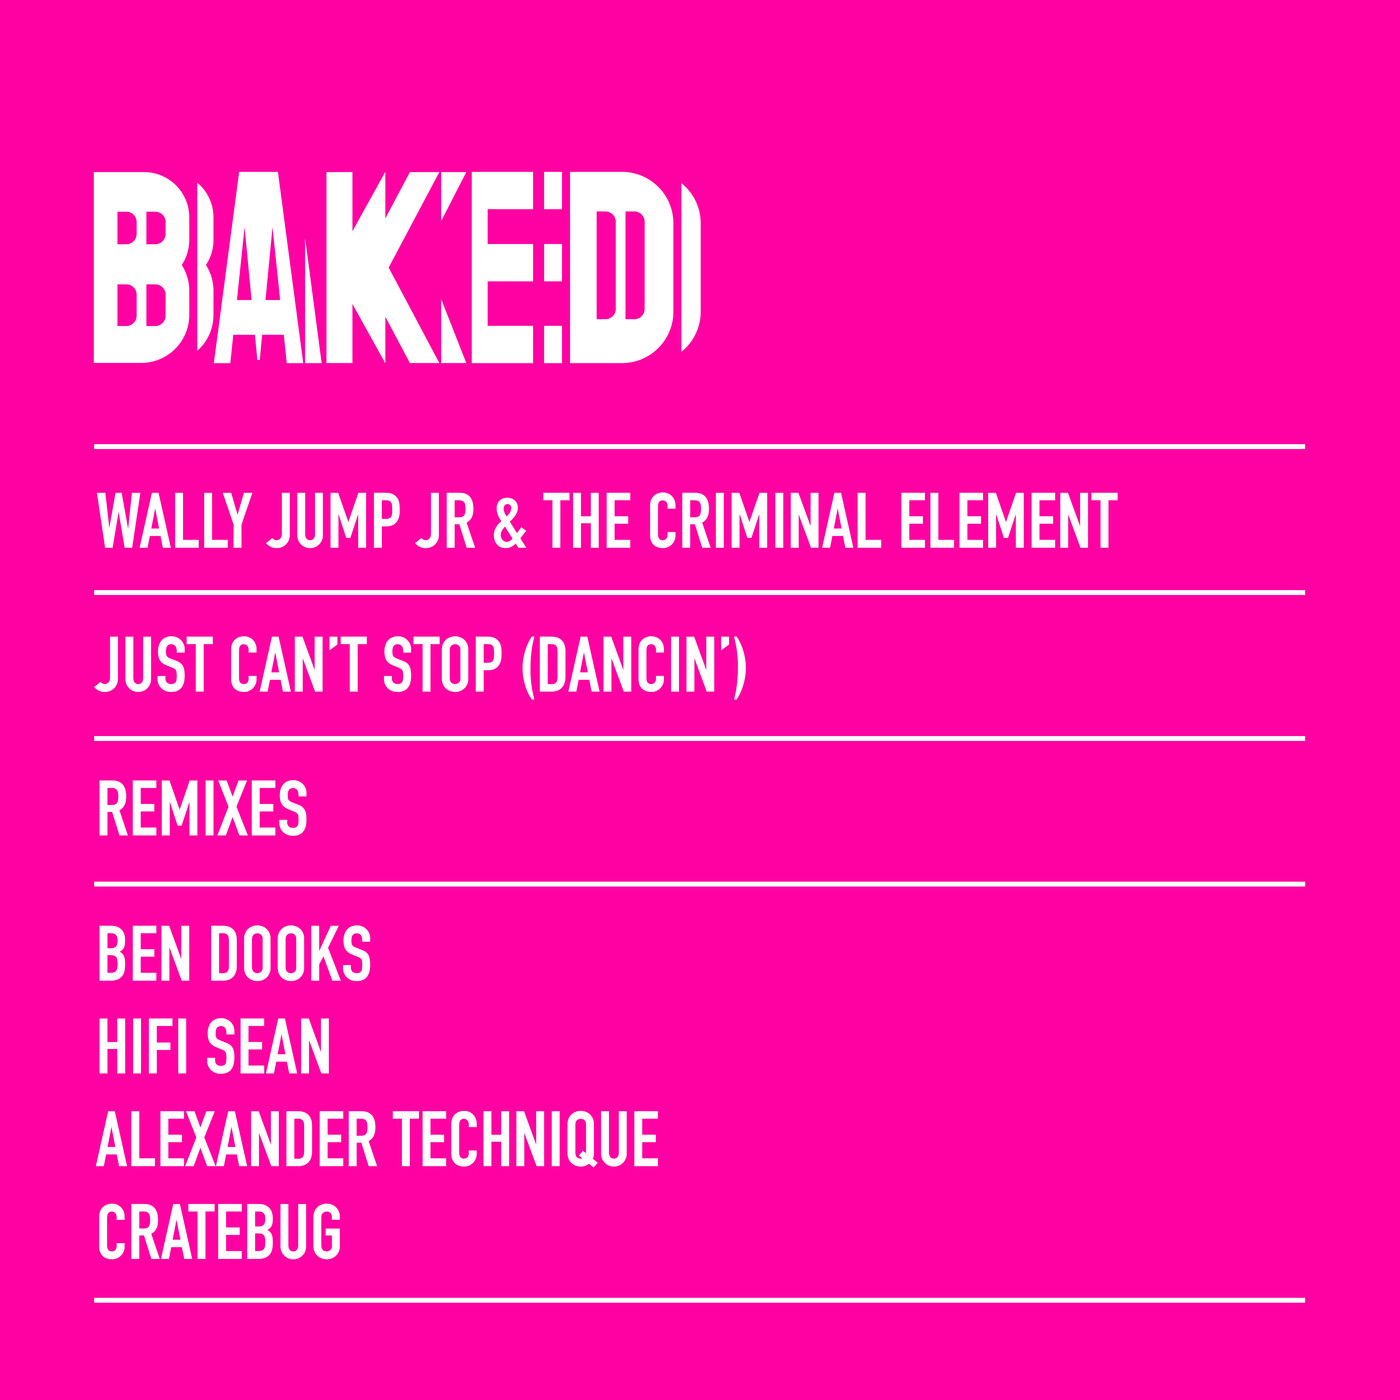 Wally Jump Jr & The Criminal Element - Just Can’t Stop (Dancin’) (Remixes) / Baked Recordings